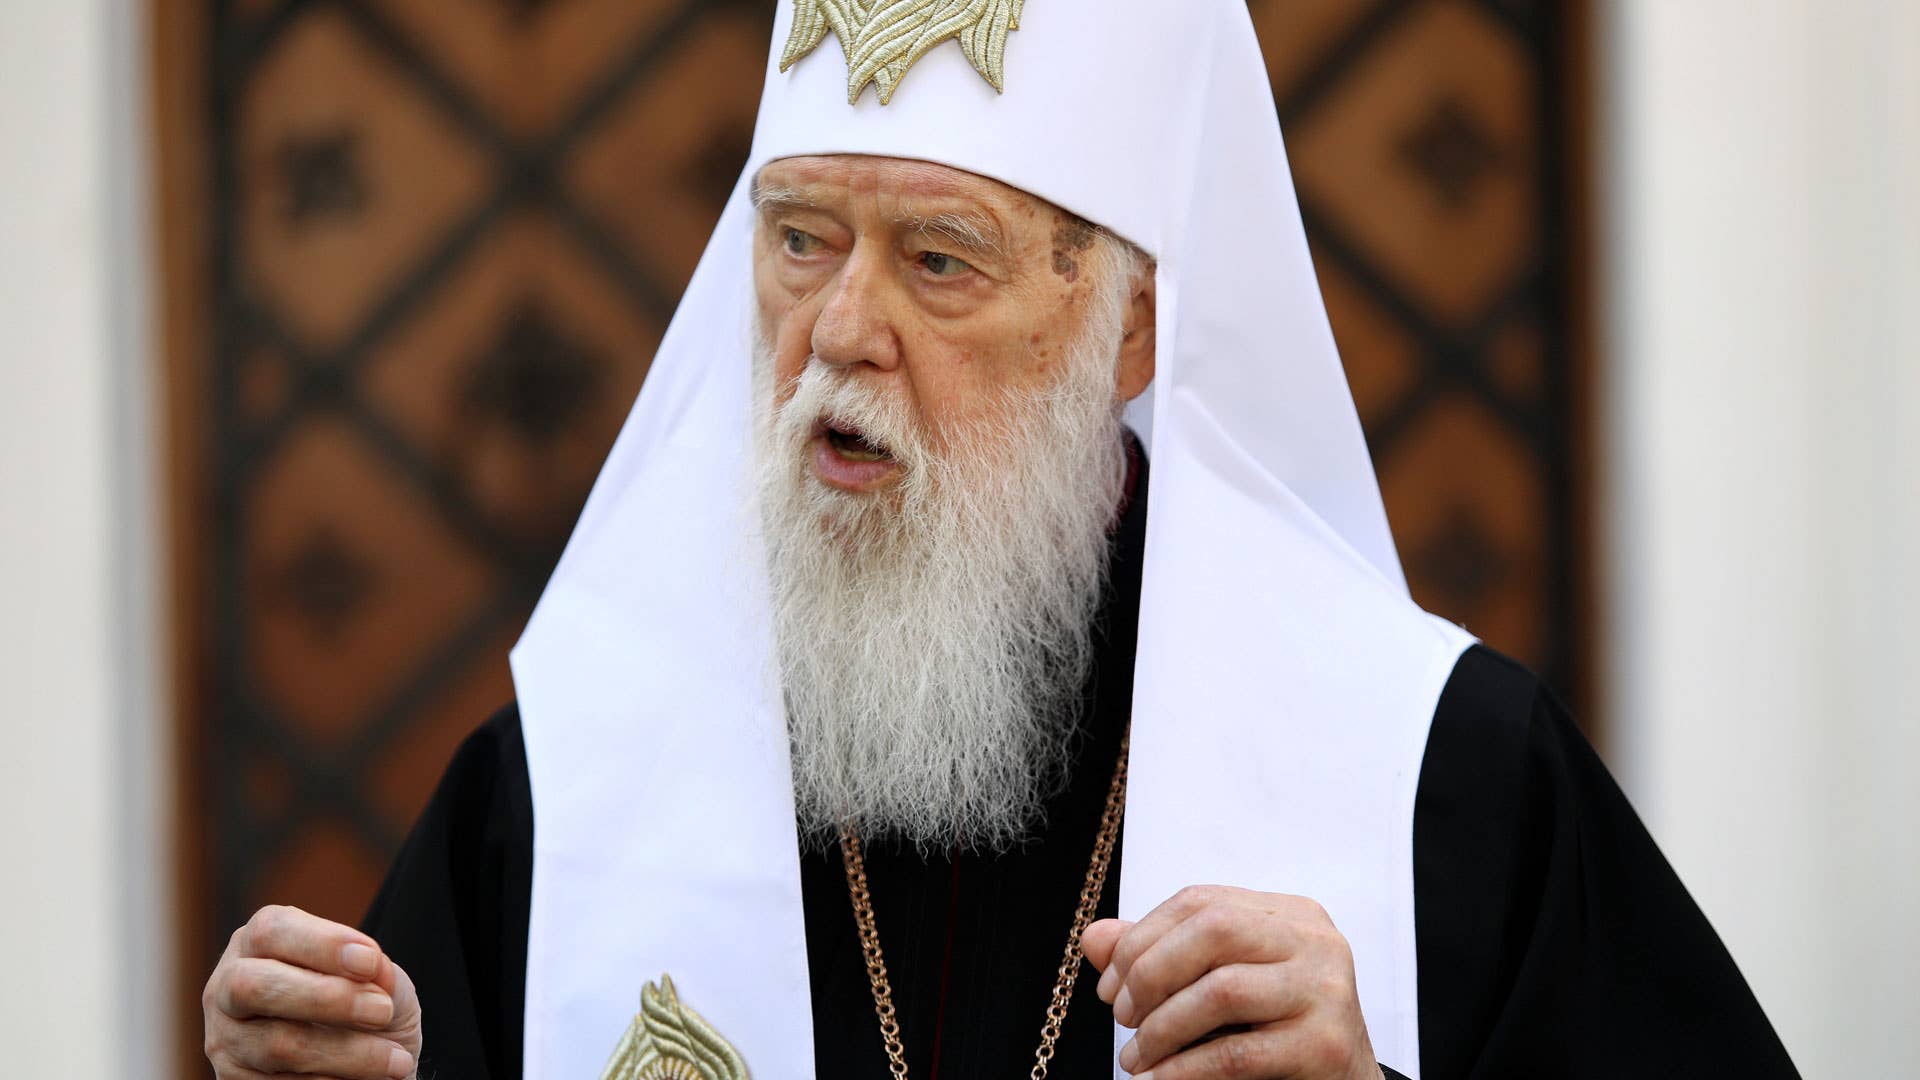 Patriarch of the Orthodox Church of Ukraine, Filaret.